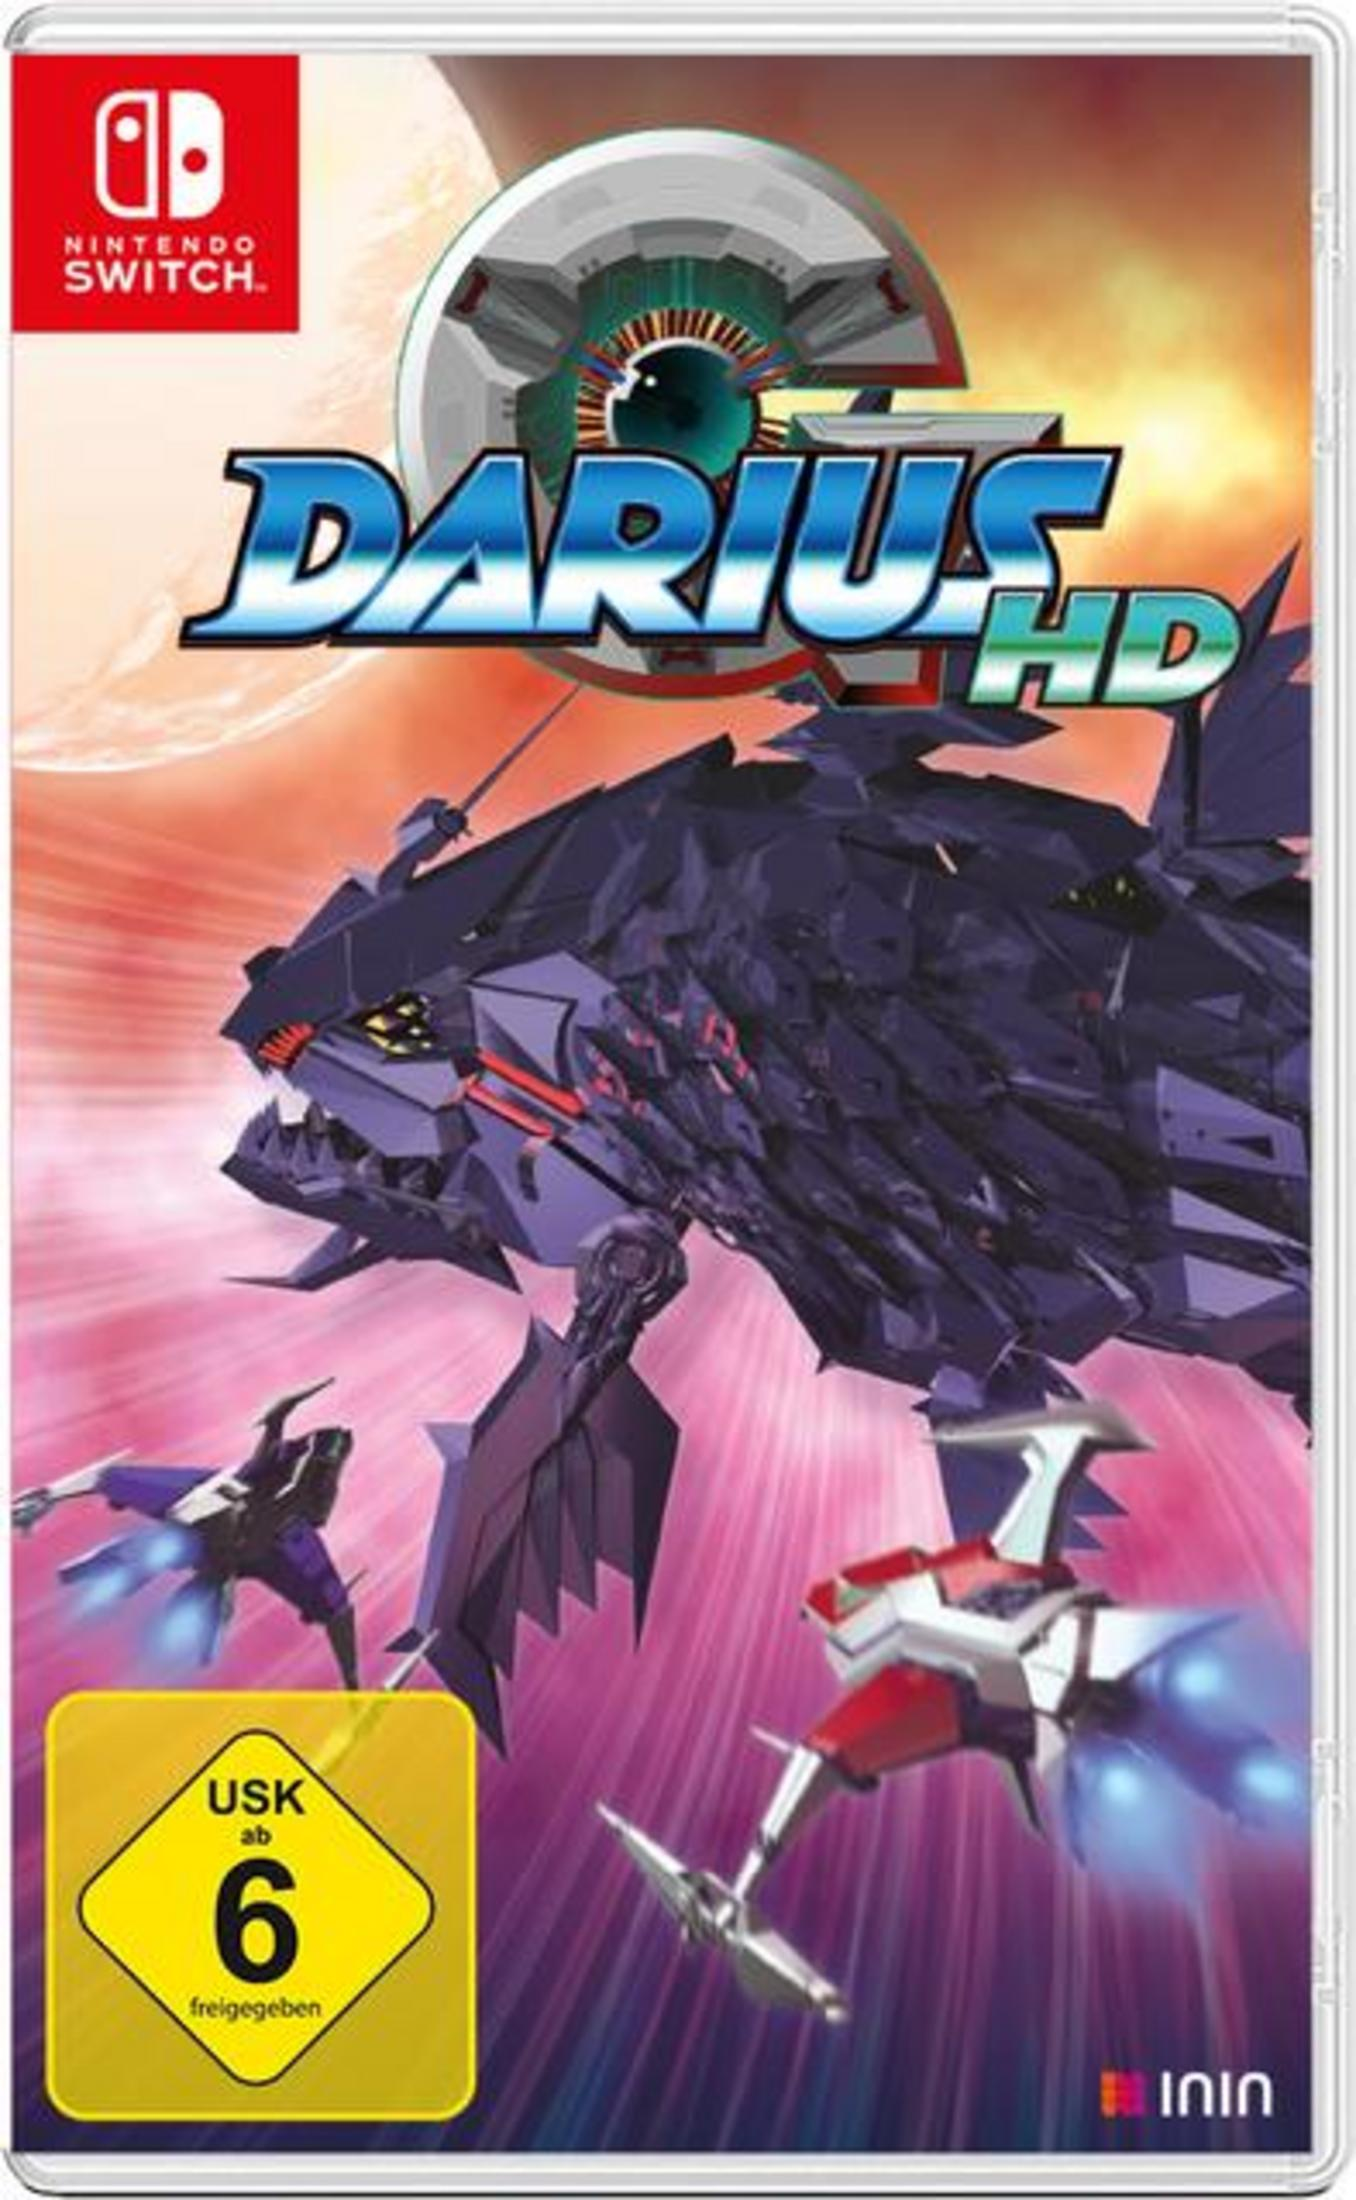 HD G-Darius Switch [Nintendo Switch] -